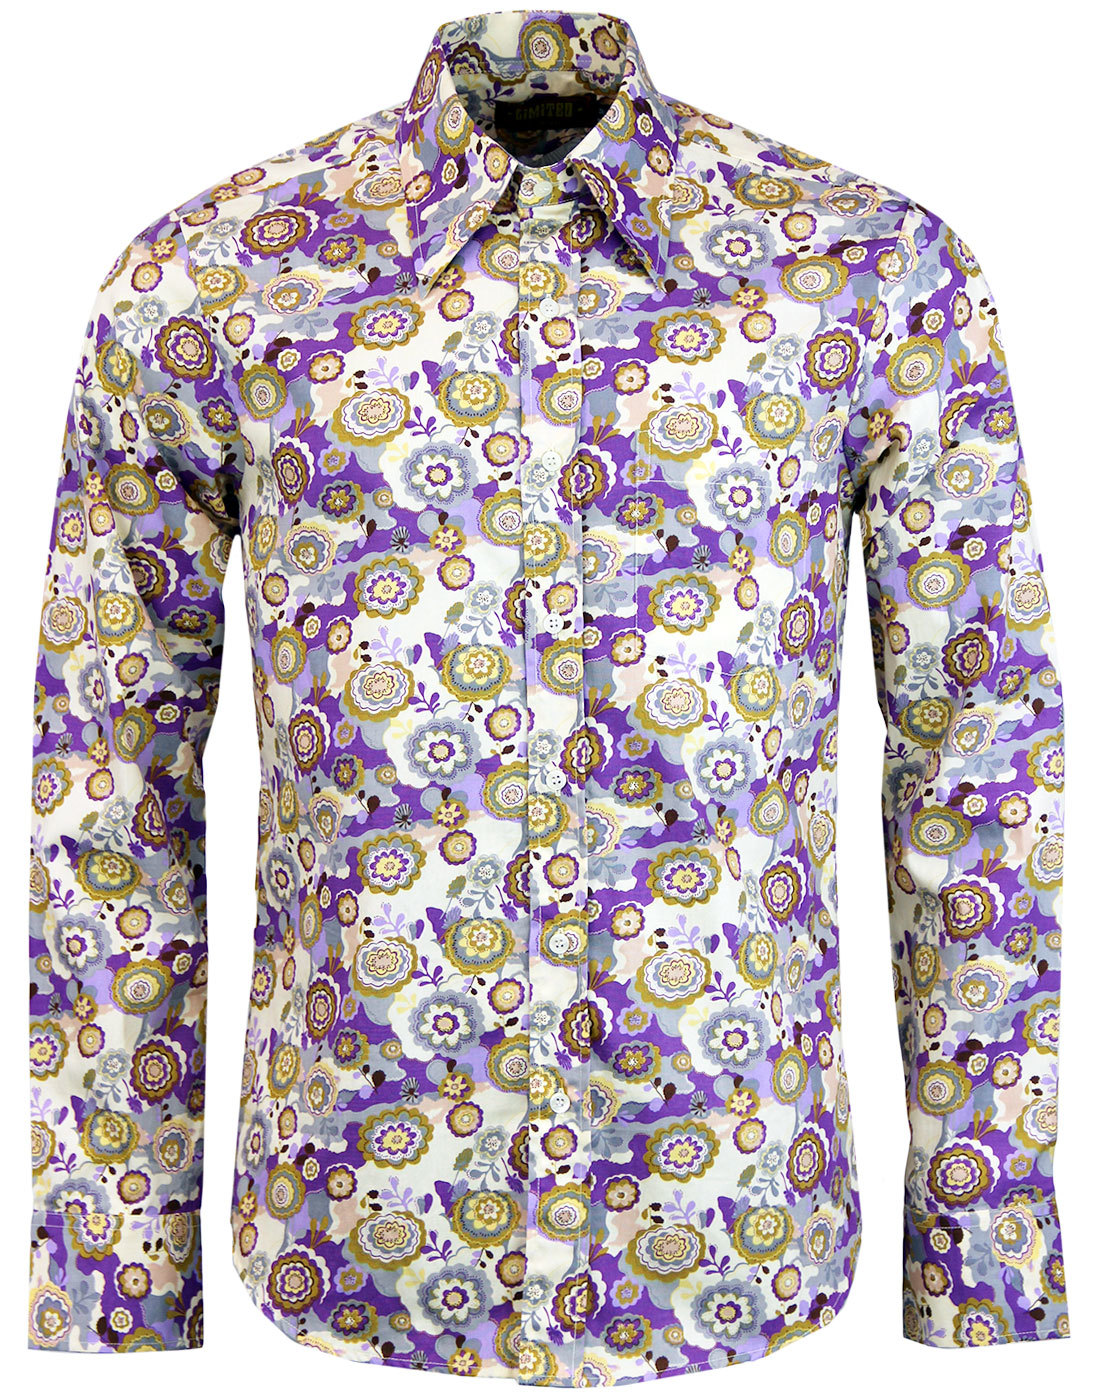 CHENASKI Outlined Flowers Men's Retro 1960s Mod Psychedelic Shirt